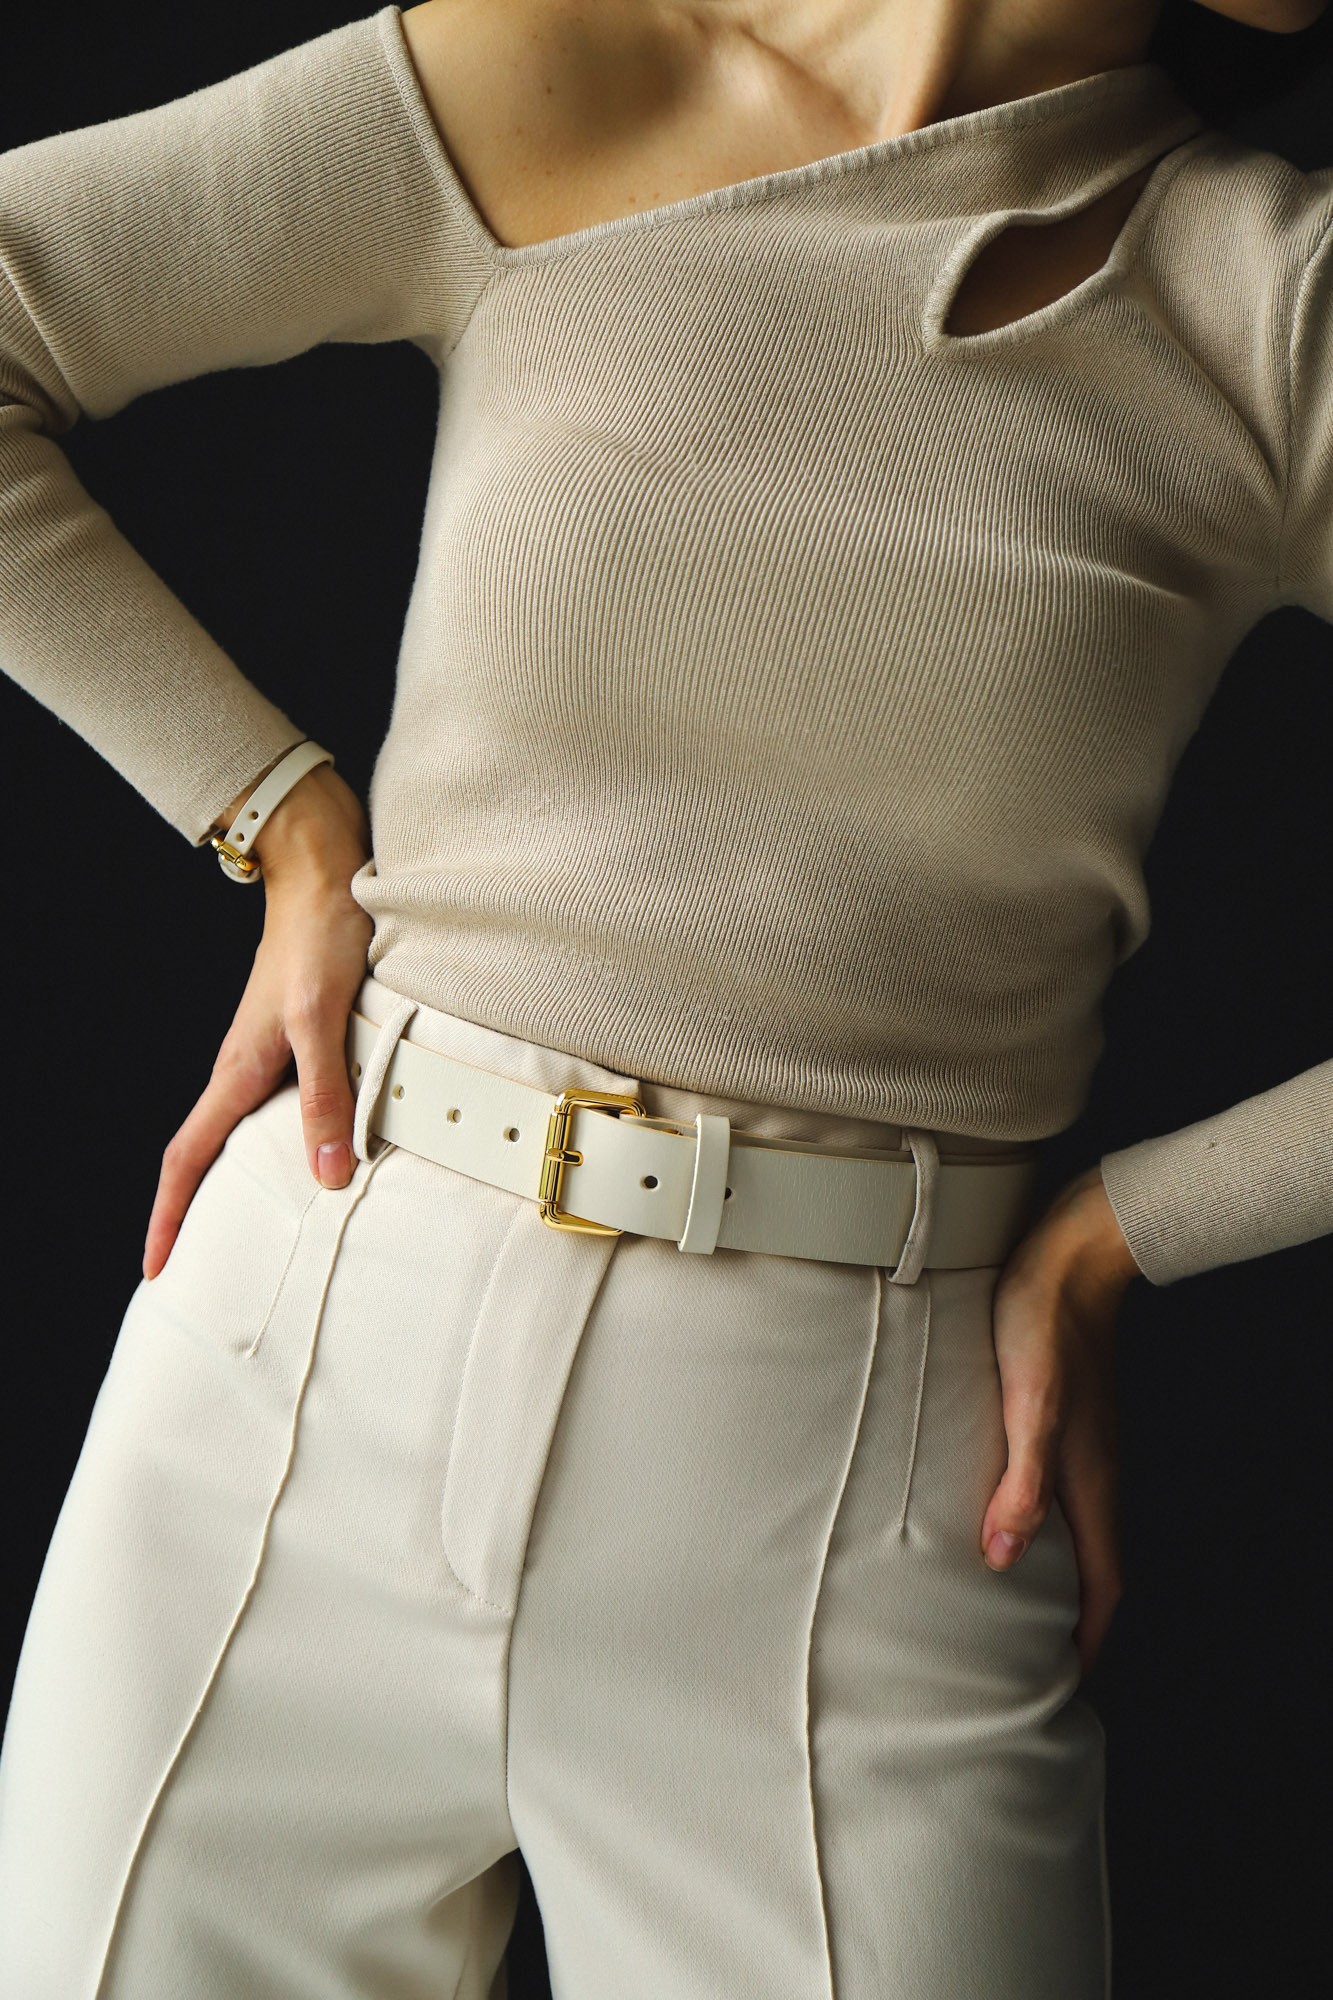 Fashion belt for woman